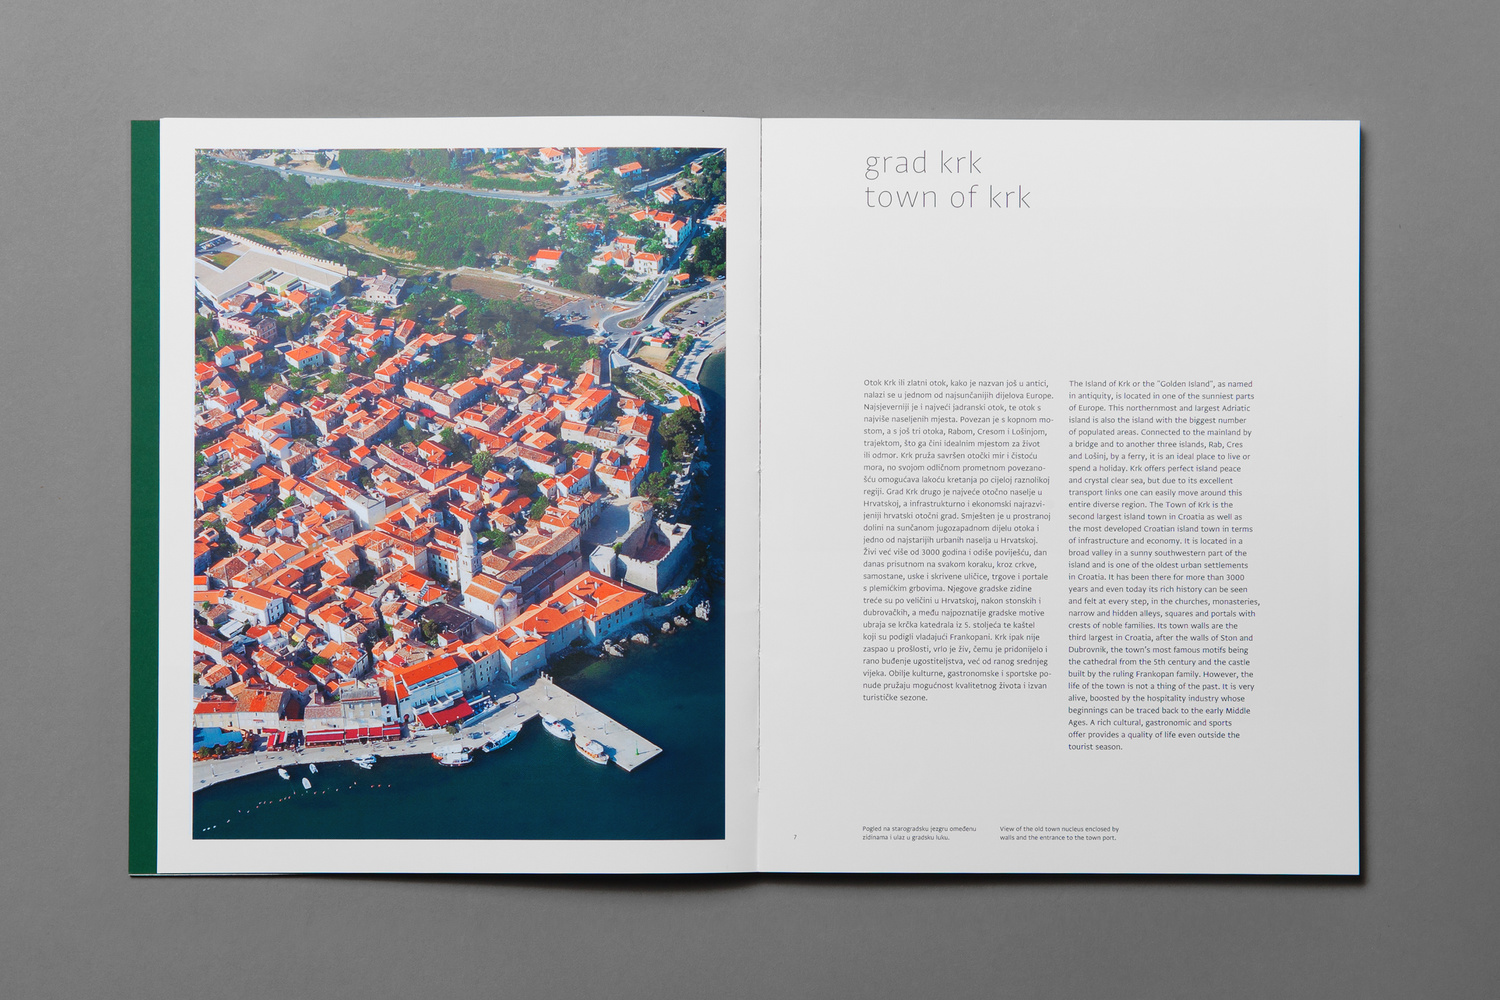 Branding and brochure spread by Studio8585 for Croatian property development Smokovik 